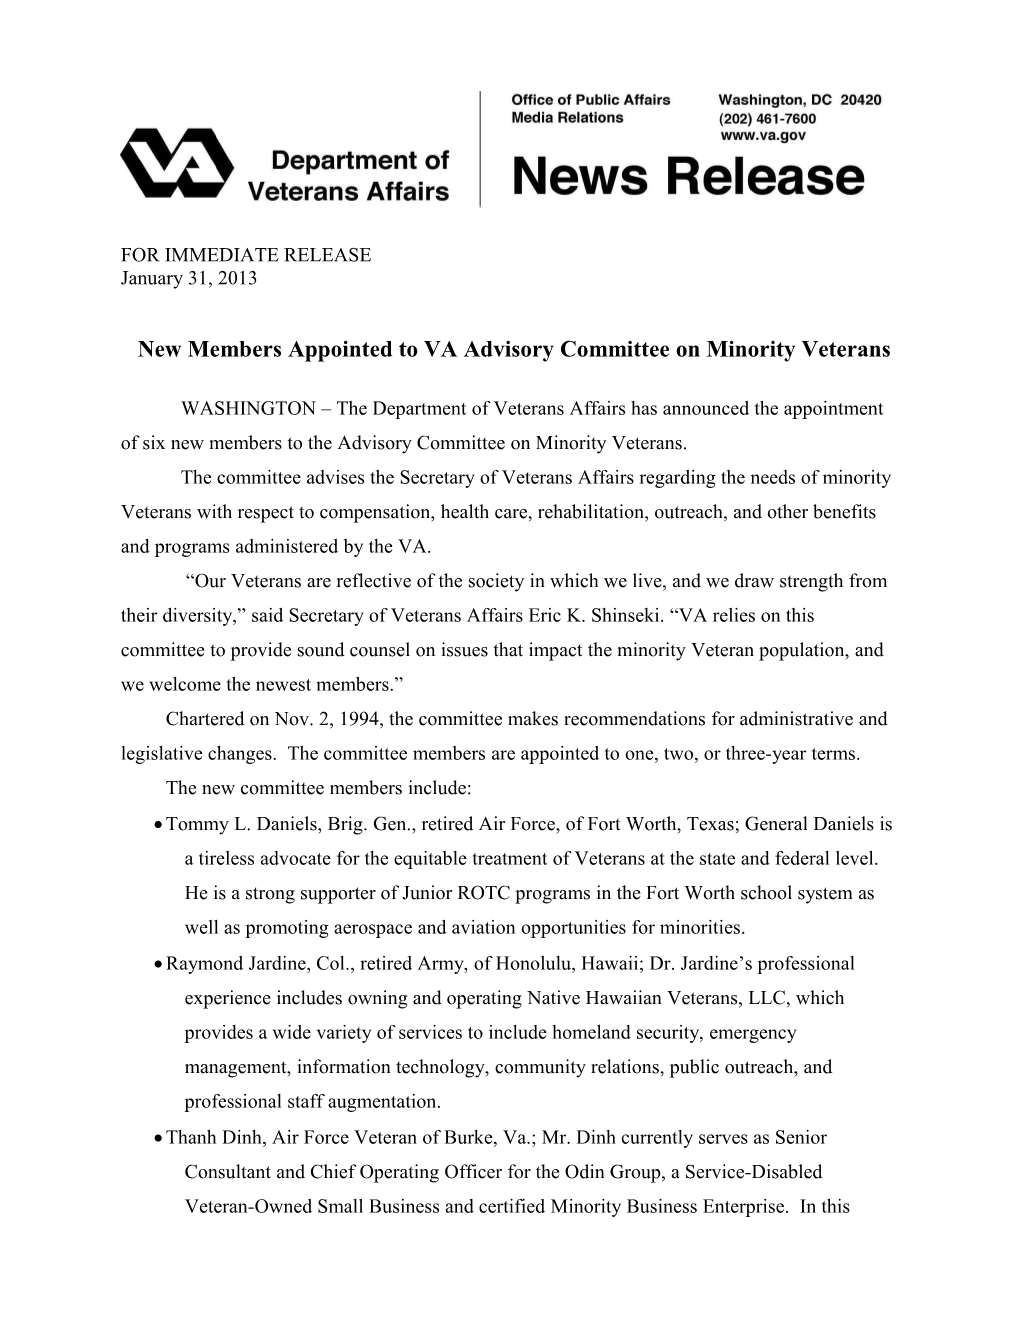 New Members Appointed to VA Advisory Committeeon Minority Veterans